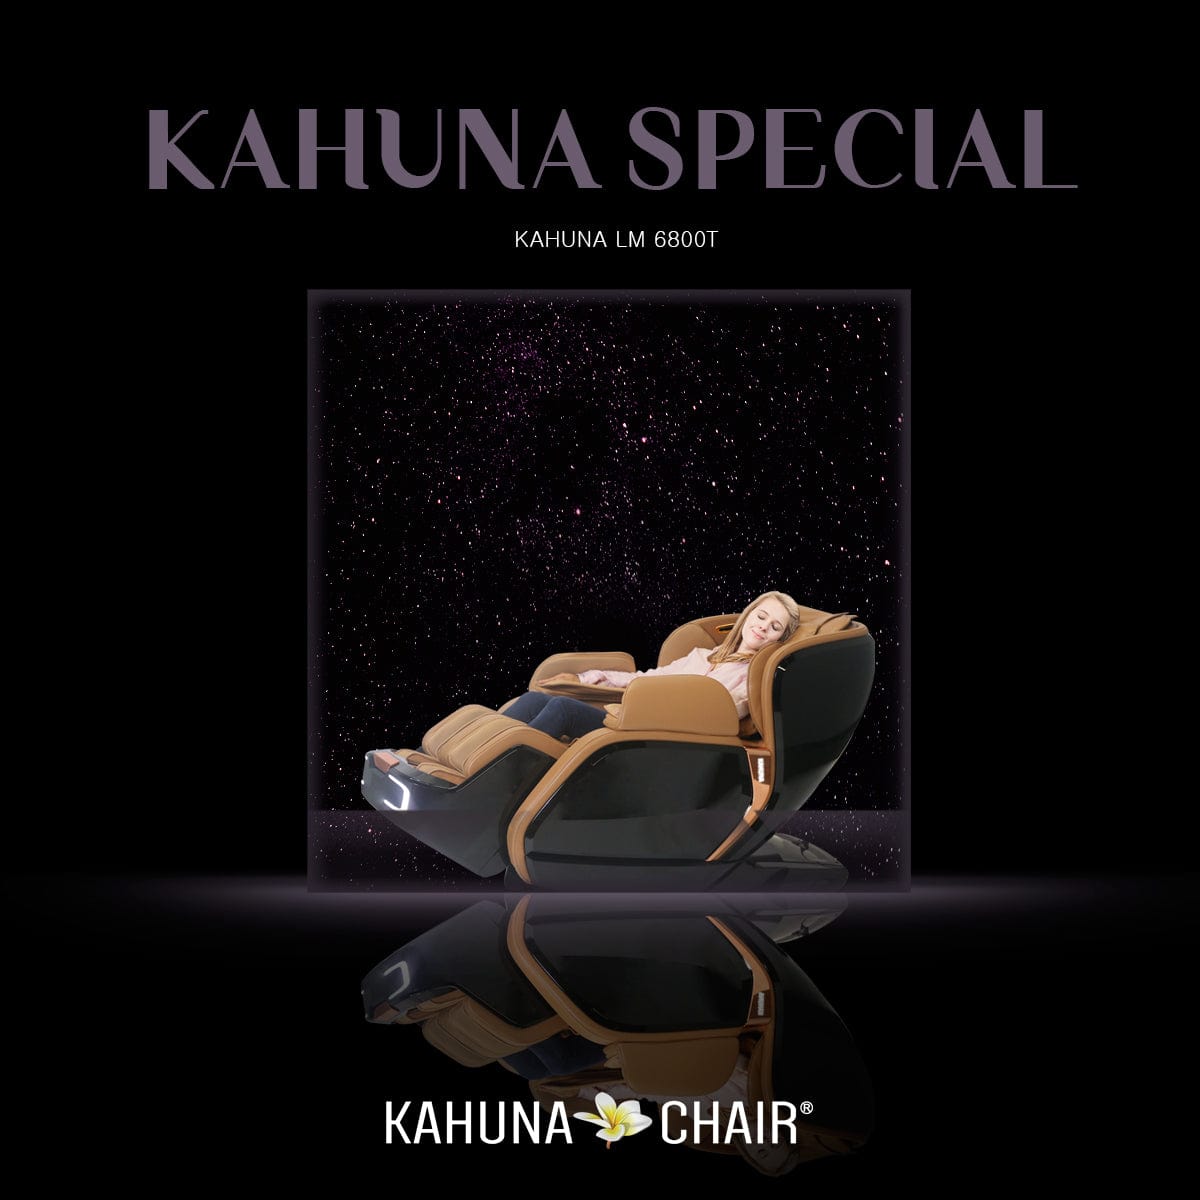 Kahuna Chair – LM-6800T White/Black - Massage Chair